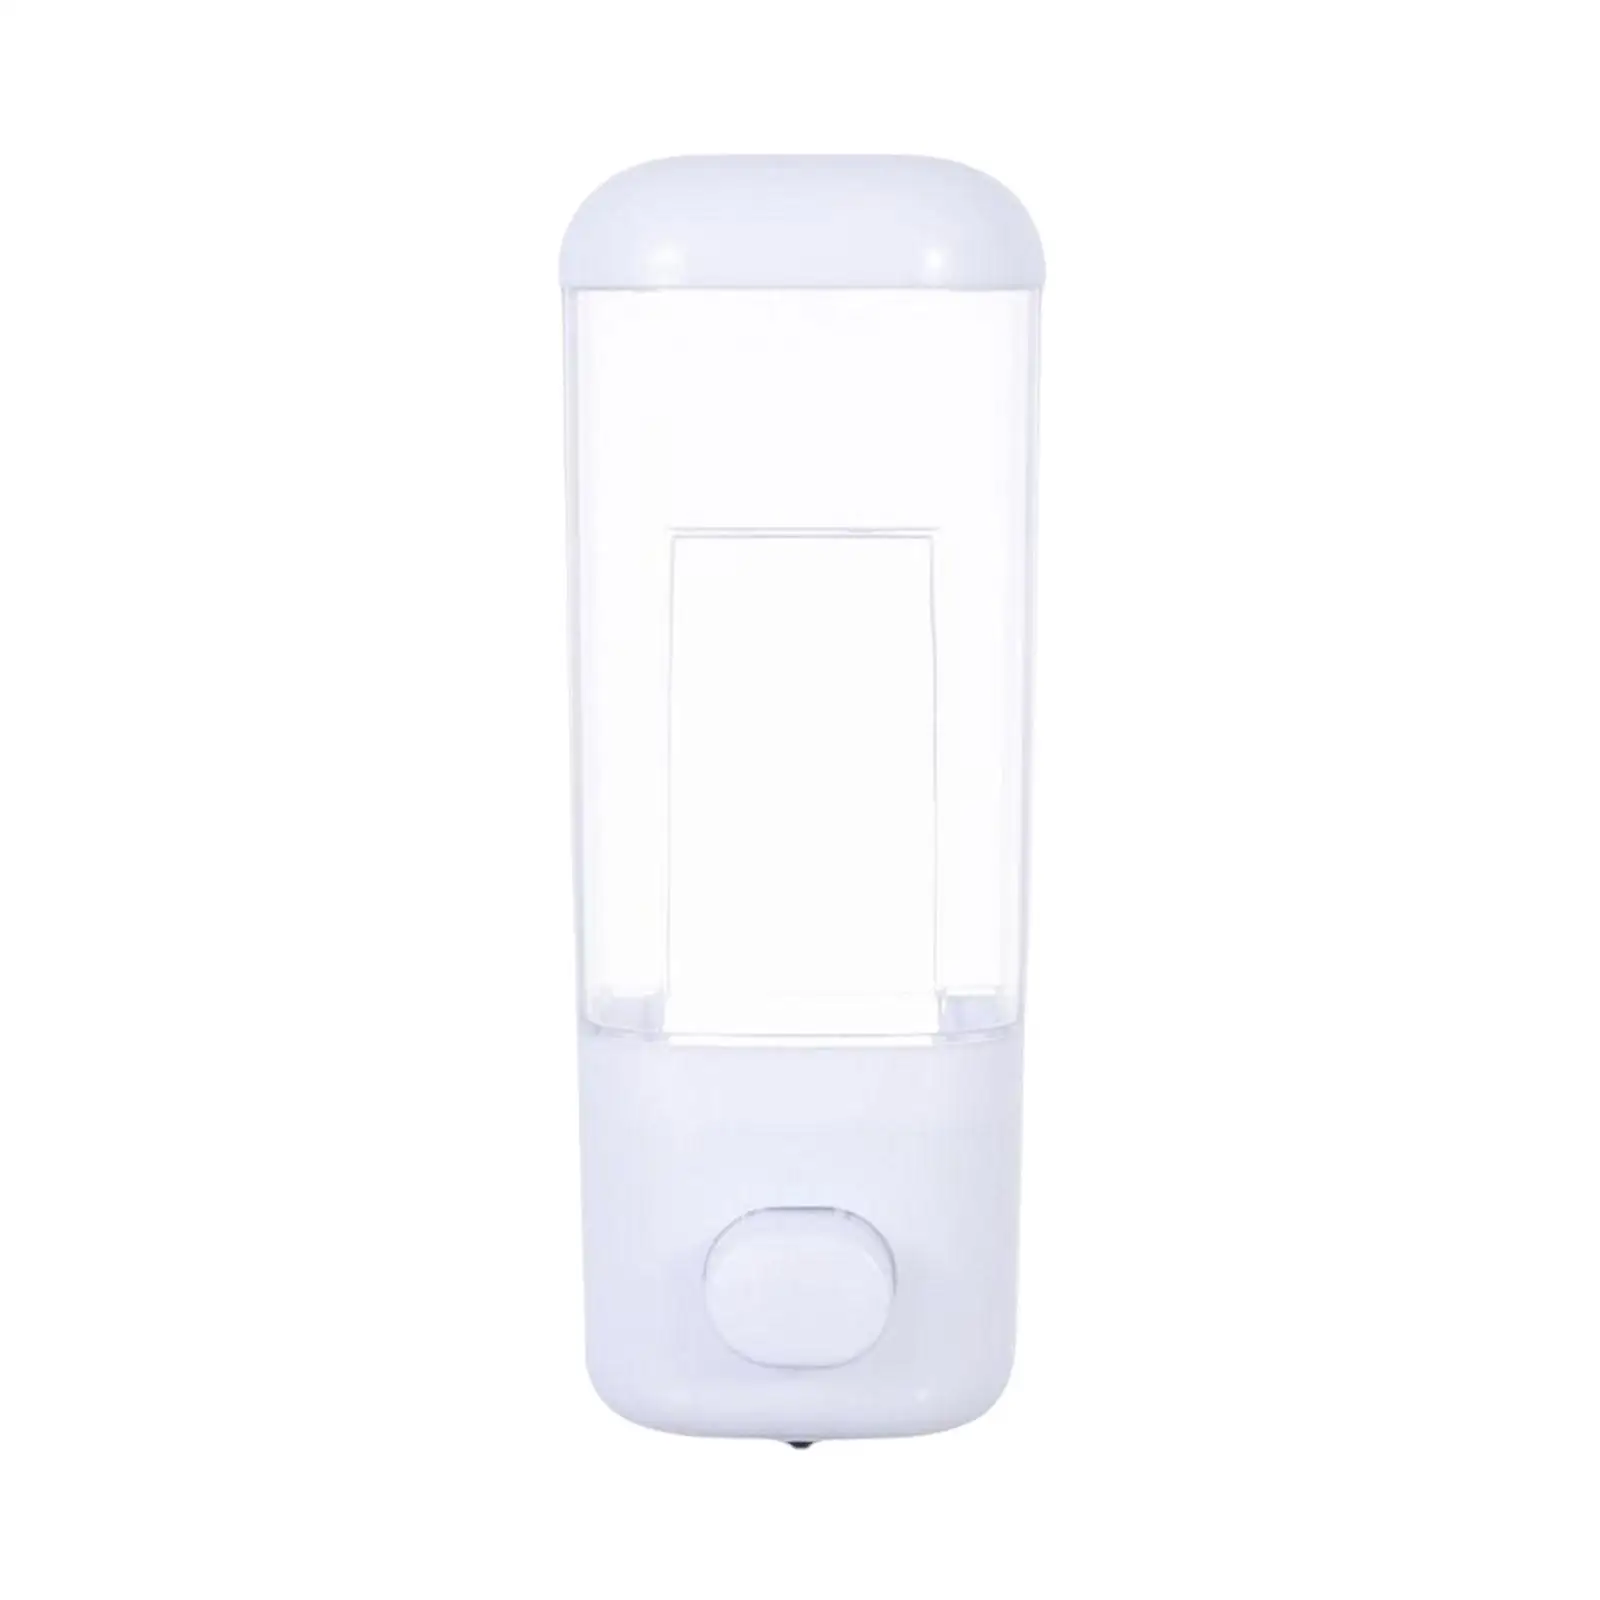 Manual Soap Dispenser Simple Pump Dispenser Plastic Liquid Containers for Hotel Home Bathroom